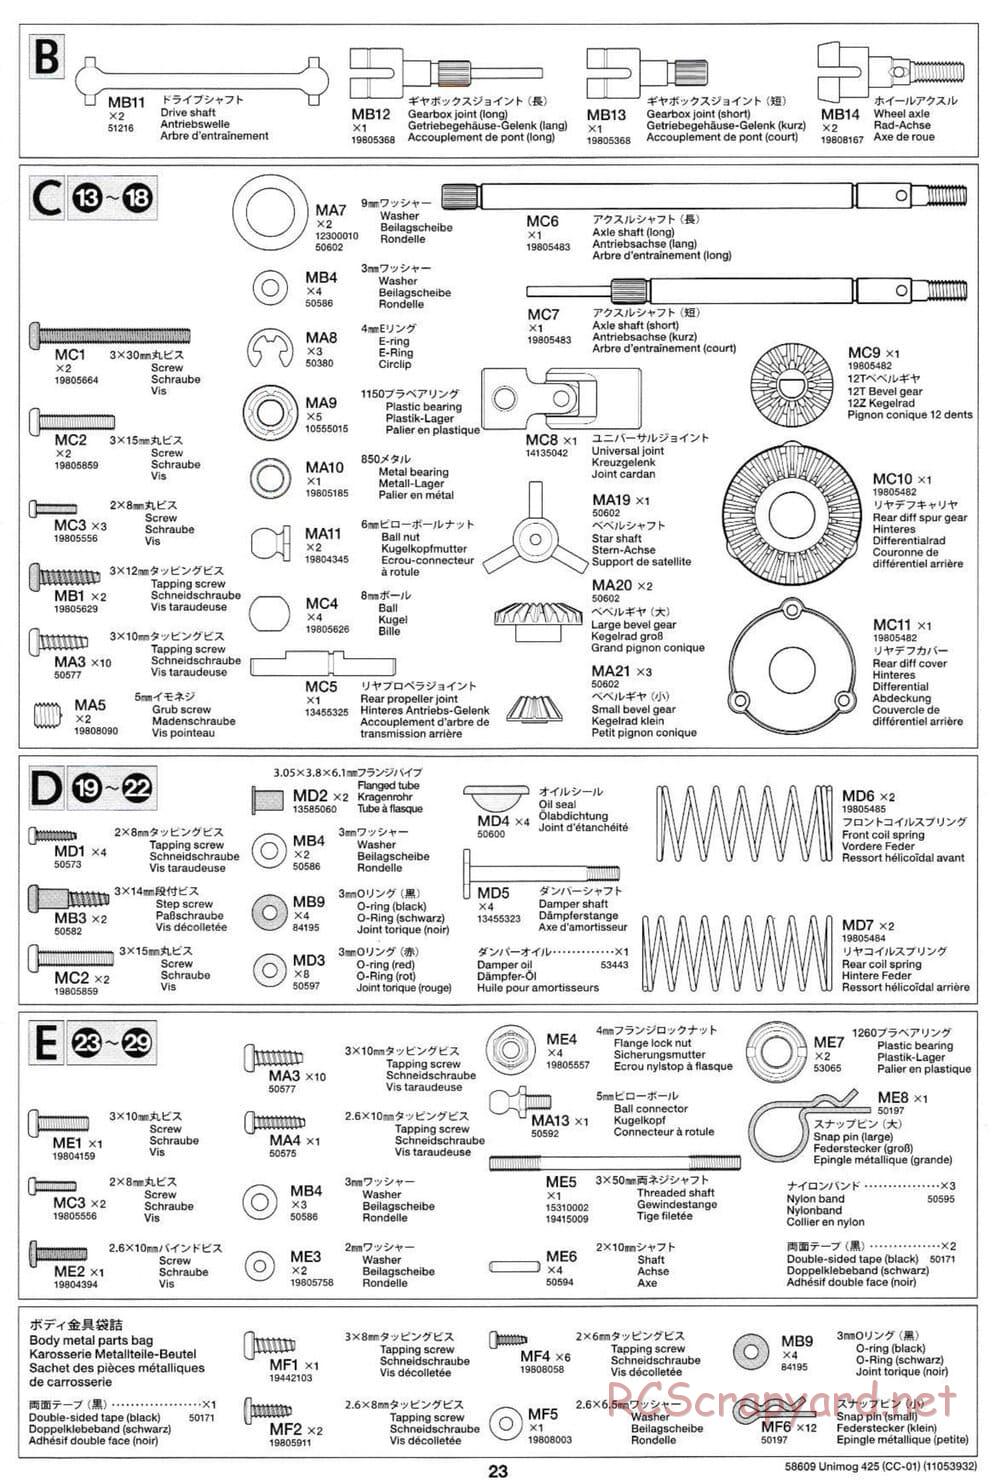 Tamiya - Mercedes-Benz Unimog 425 - CC-01 Chassis - Manual - Page 23